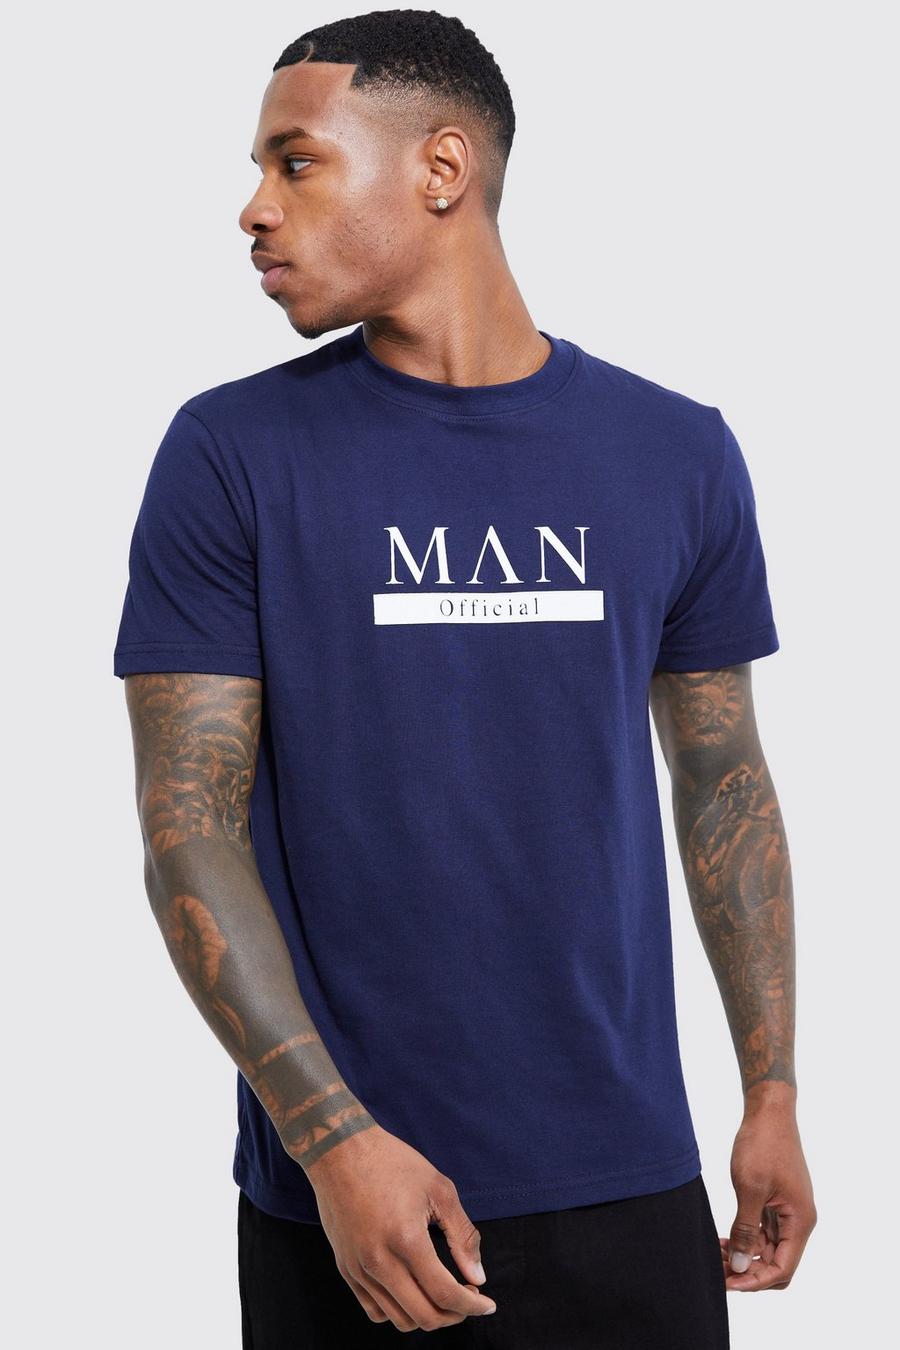 Man Gold Slim-Fit Official T-Shirt, Navy image number 1